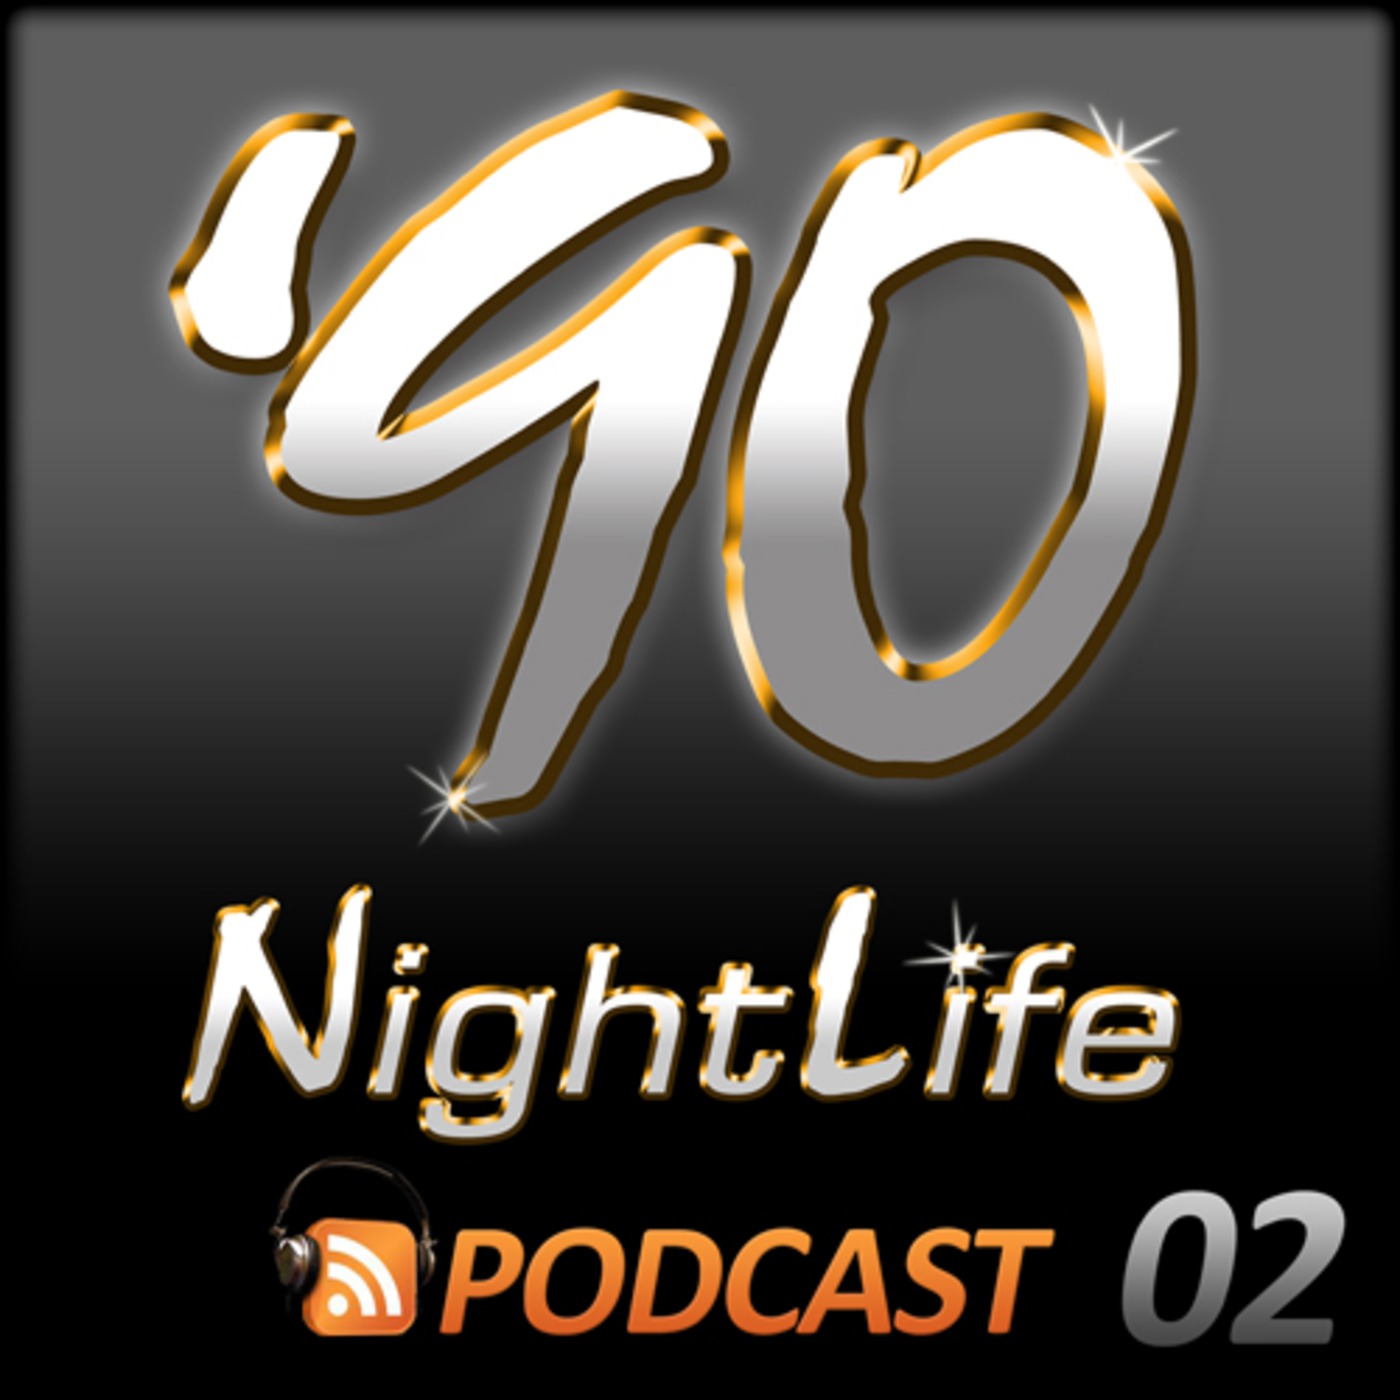 '90 NightLife - Podcast 02